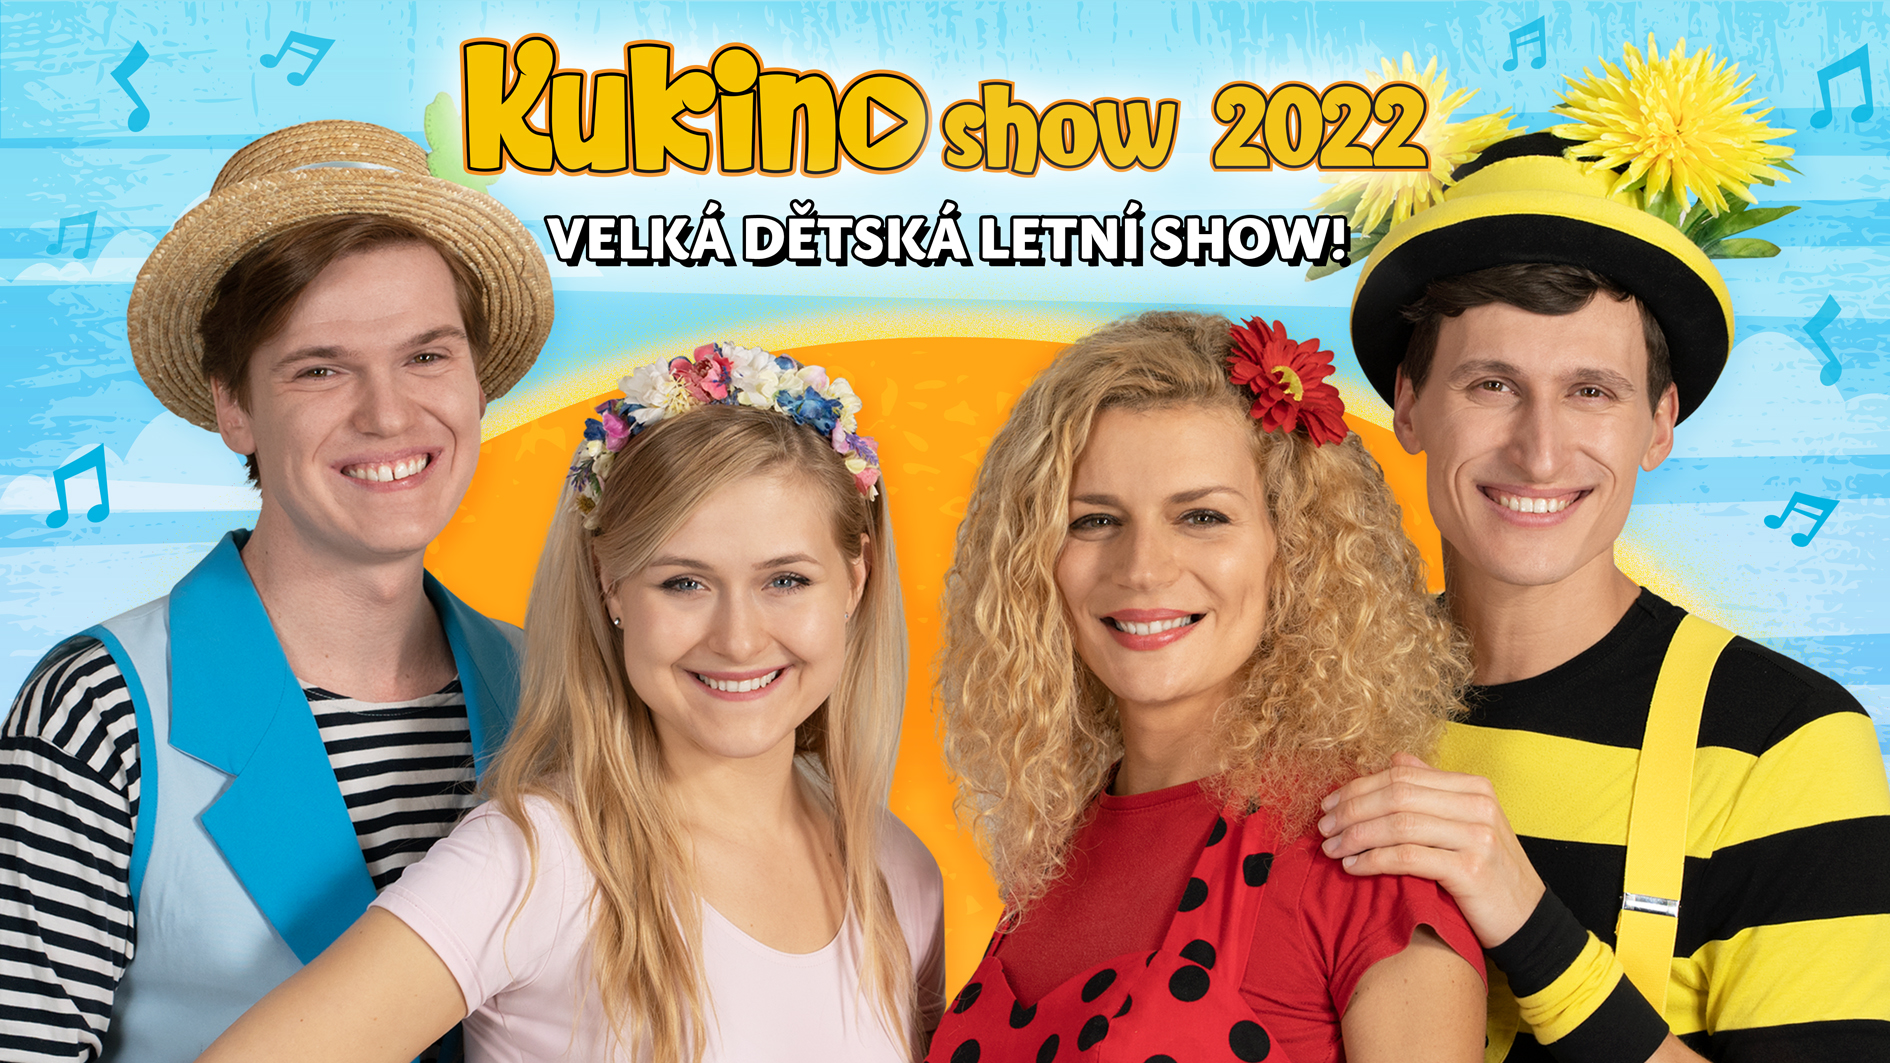 fb event kukino show22 cz